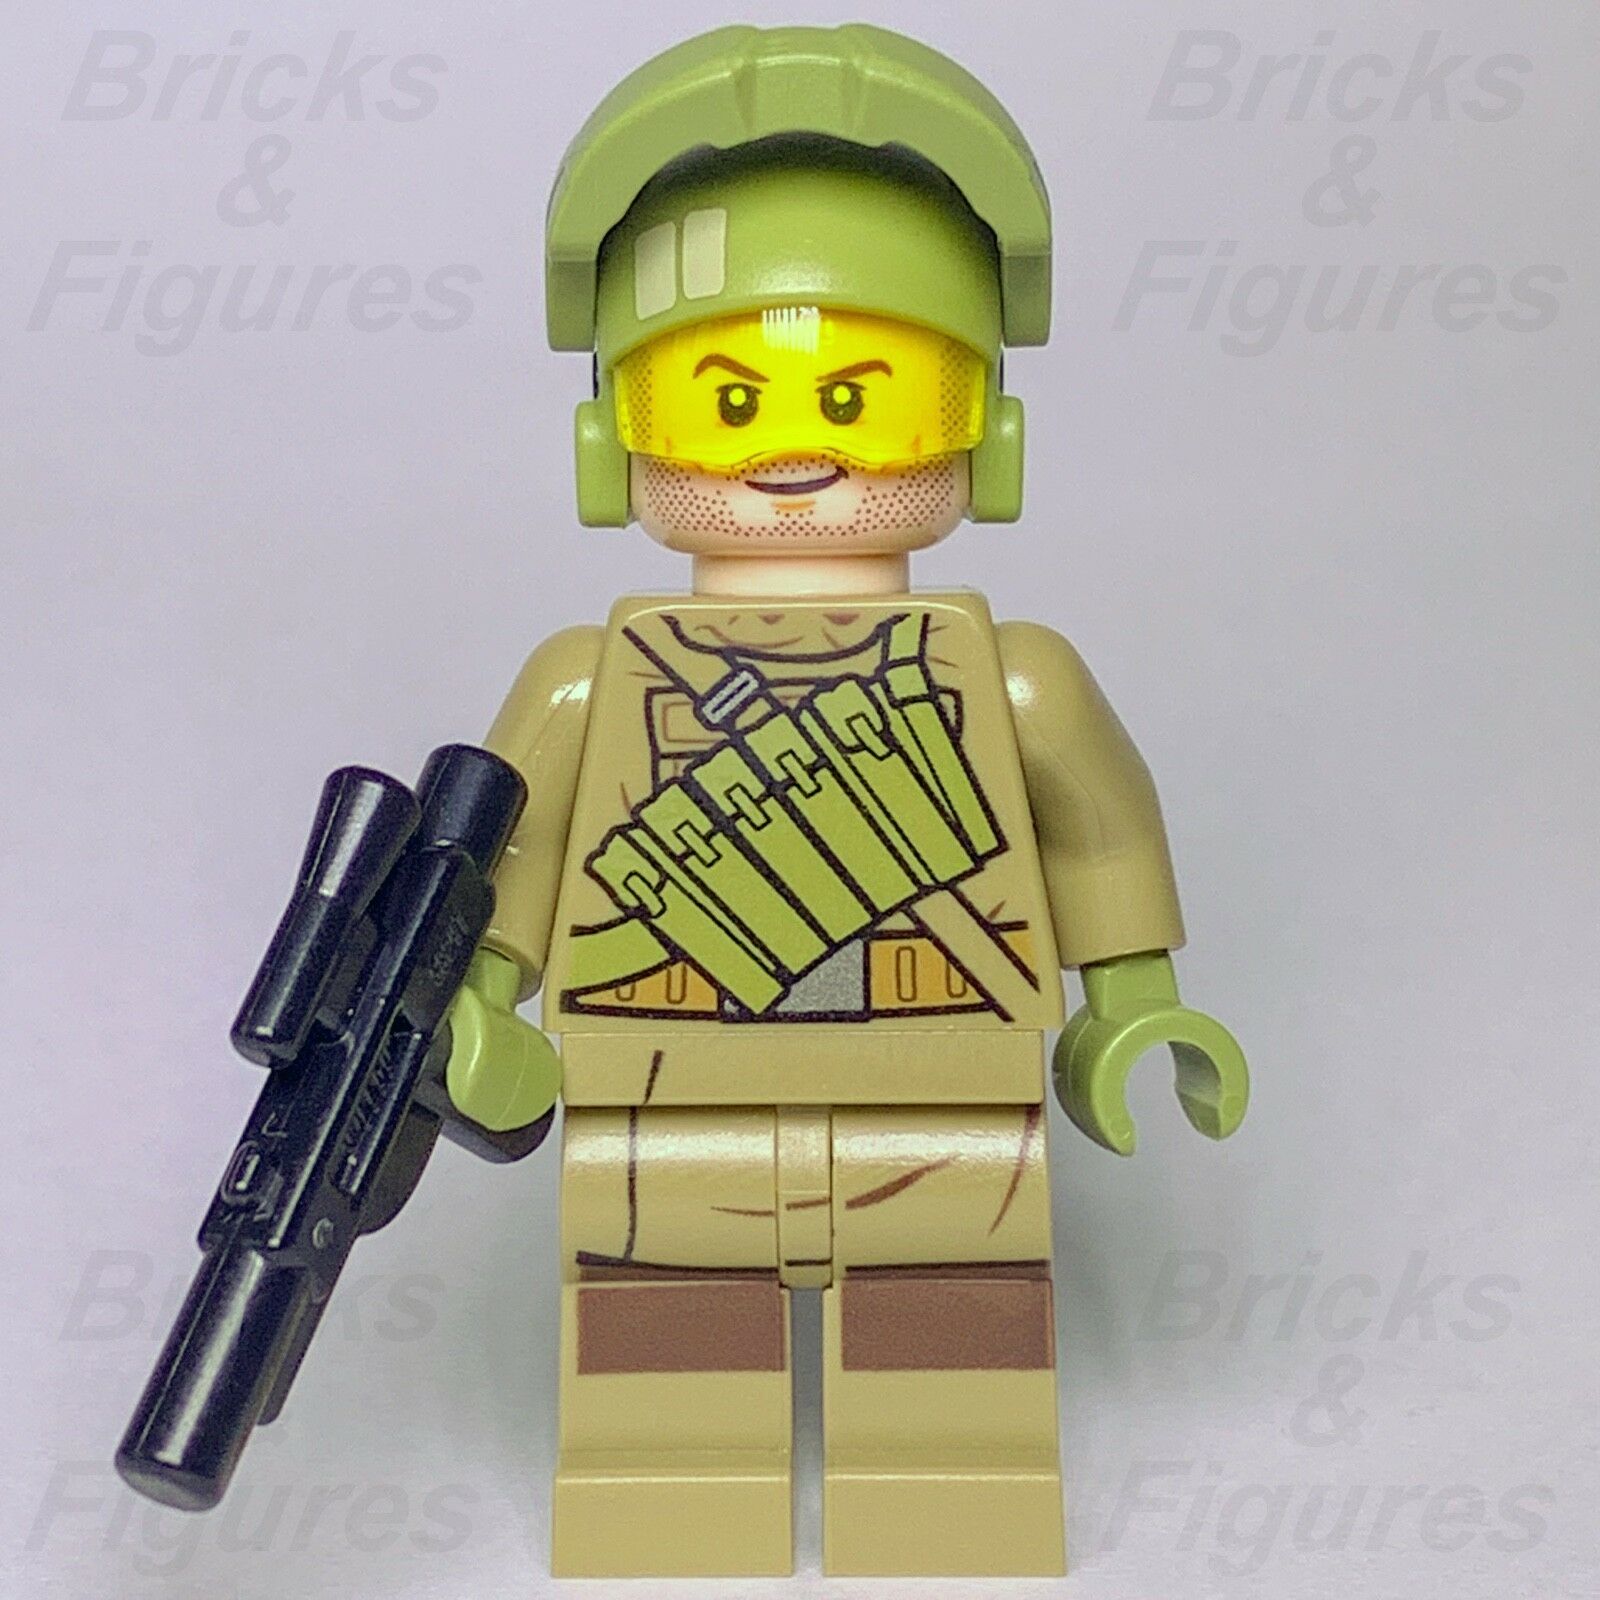 New Star Wars LEGO Resistance Trooper Fighter The Last Jedi Minifigure 75202 - Bricks & Figures